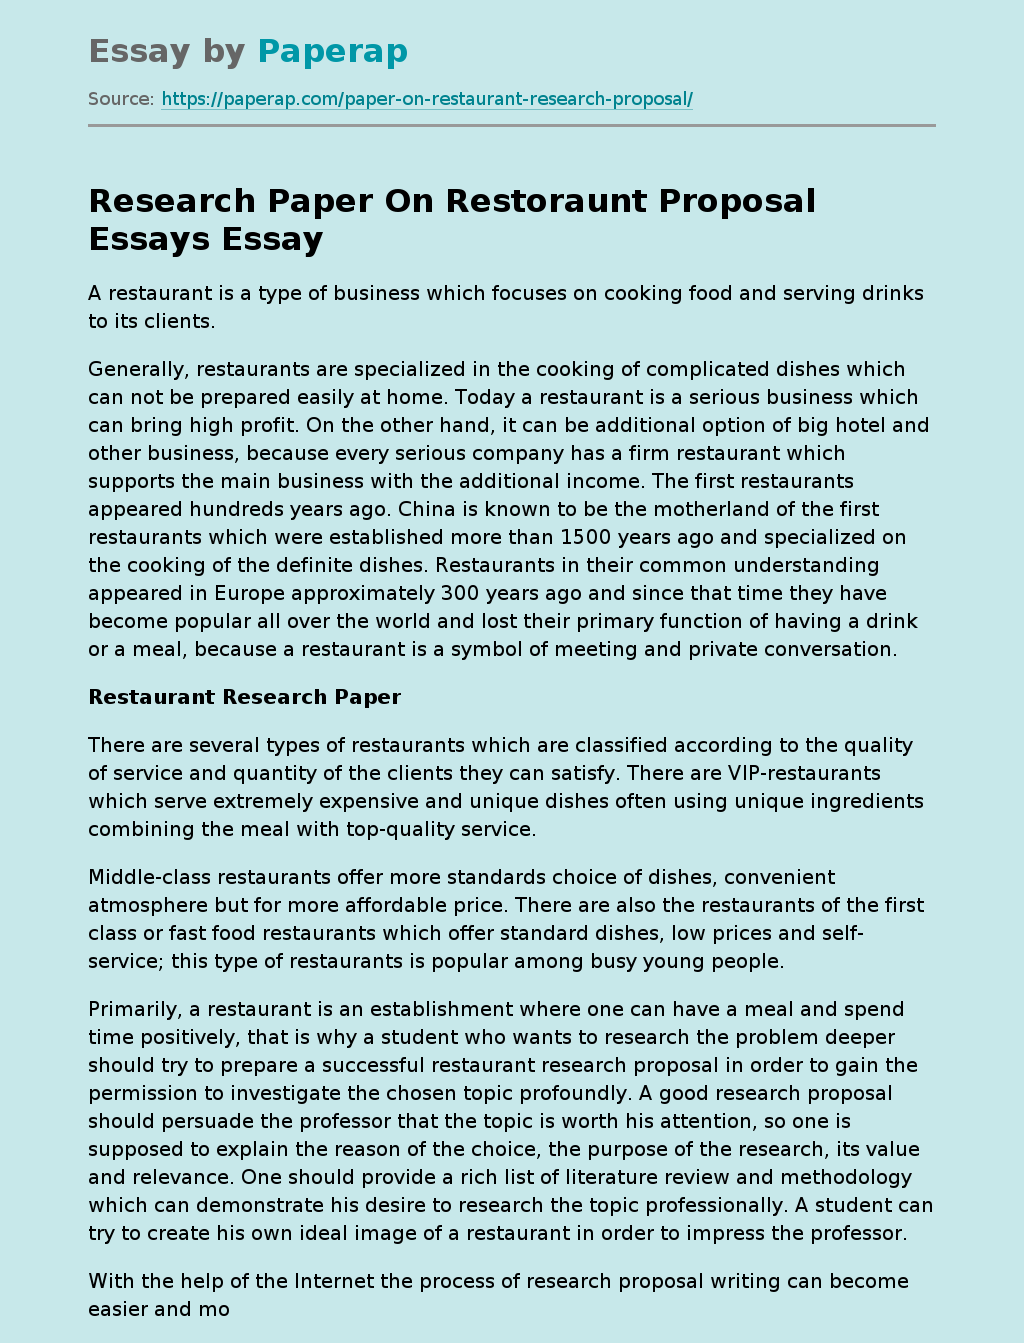 Research Paper On Restoraunt Proposal Essays